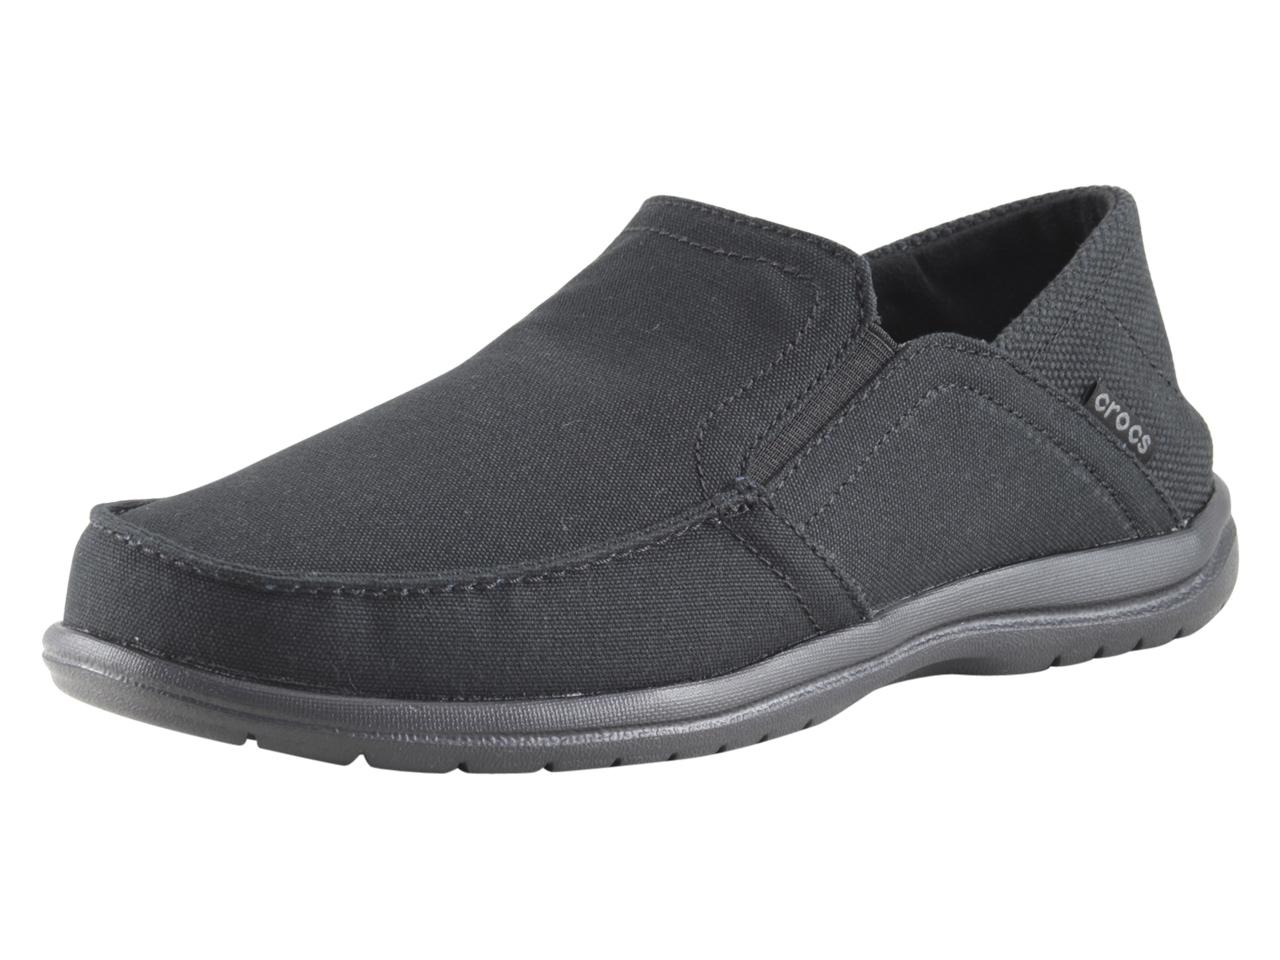 Crocs Men's Santa Cruz Convertible Slip-On Loafers Shoes | JoyLot.com